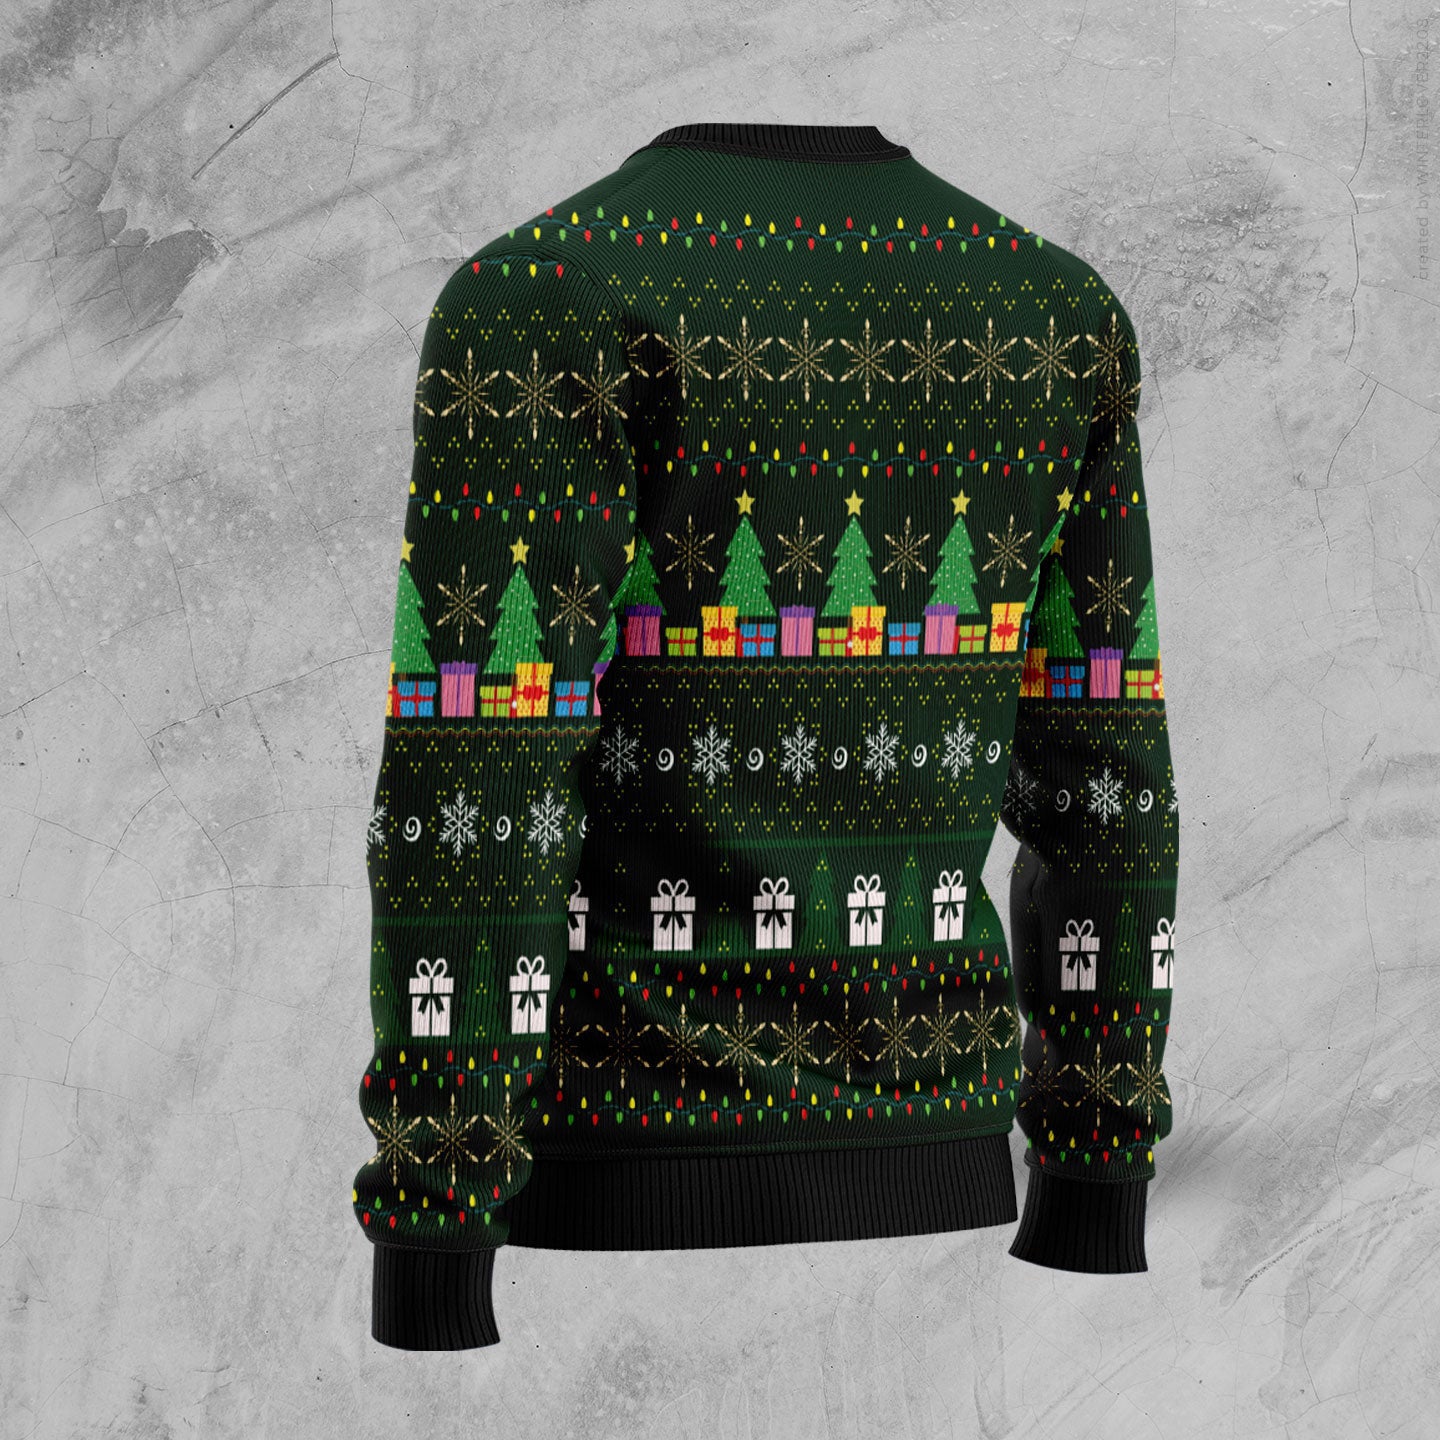 Jesus Christmas Ugly Christmas Sweater - Xmas Gifts For Him Or Her - Jesus Christ Sweater - Christian Shirts Gifts Idea